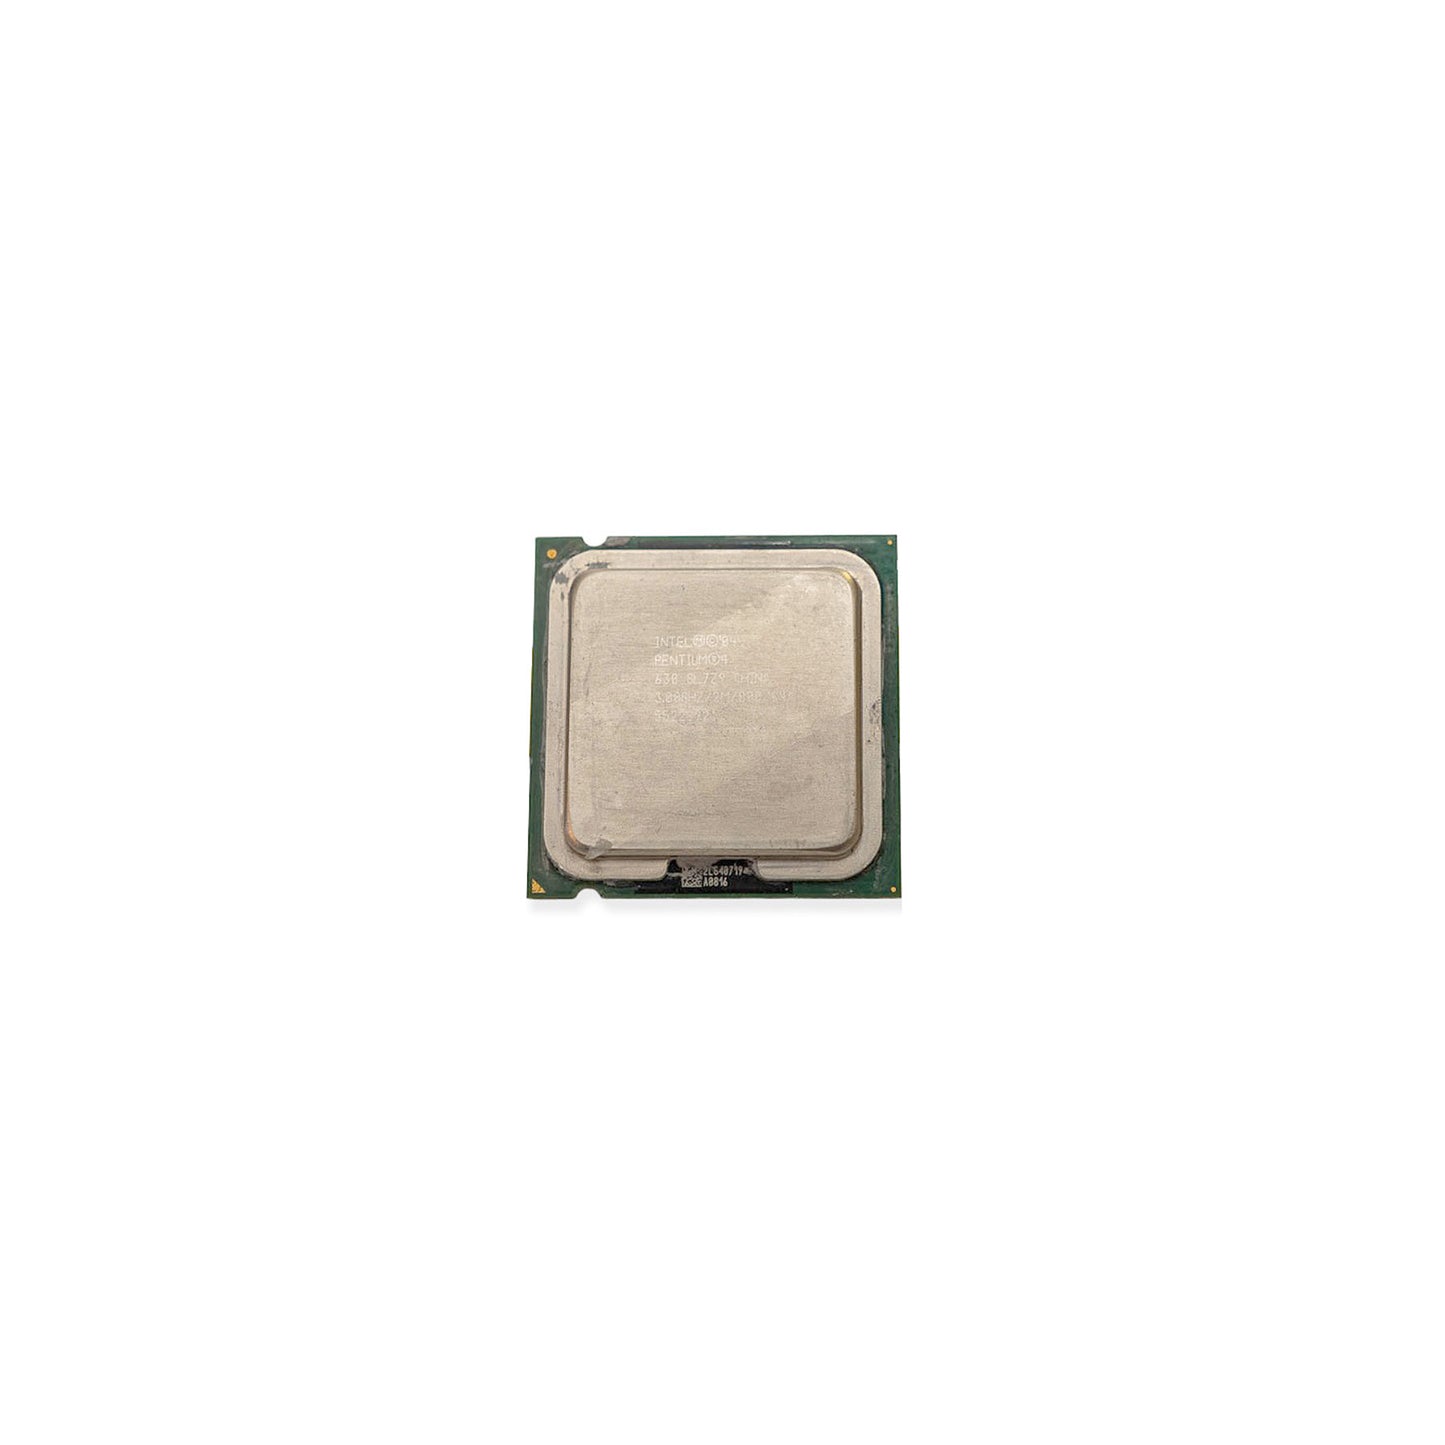 Processador Intel Pentium 4 630 cache de 2 M, 3,00 GHz LGA775